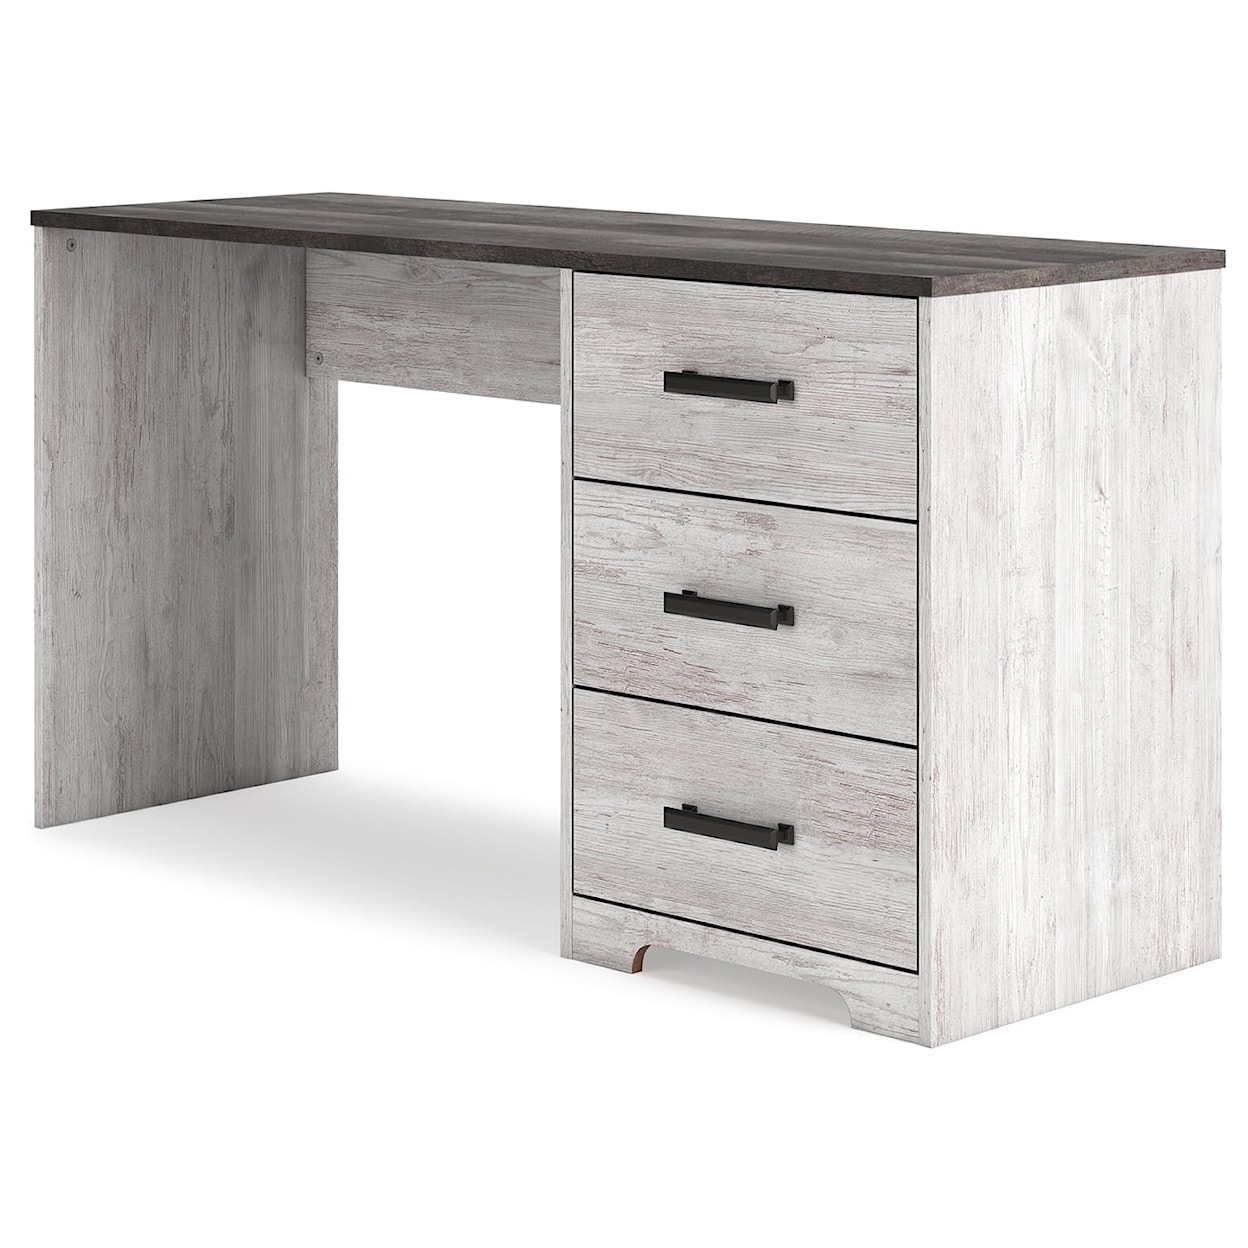 Ashley Furniture Signature Design Shawburn Home Office Desk